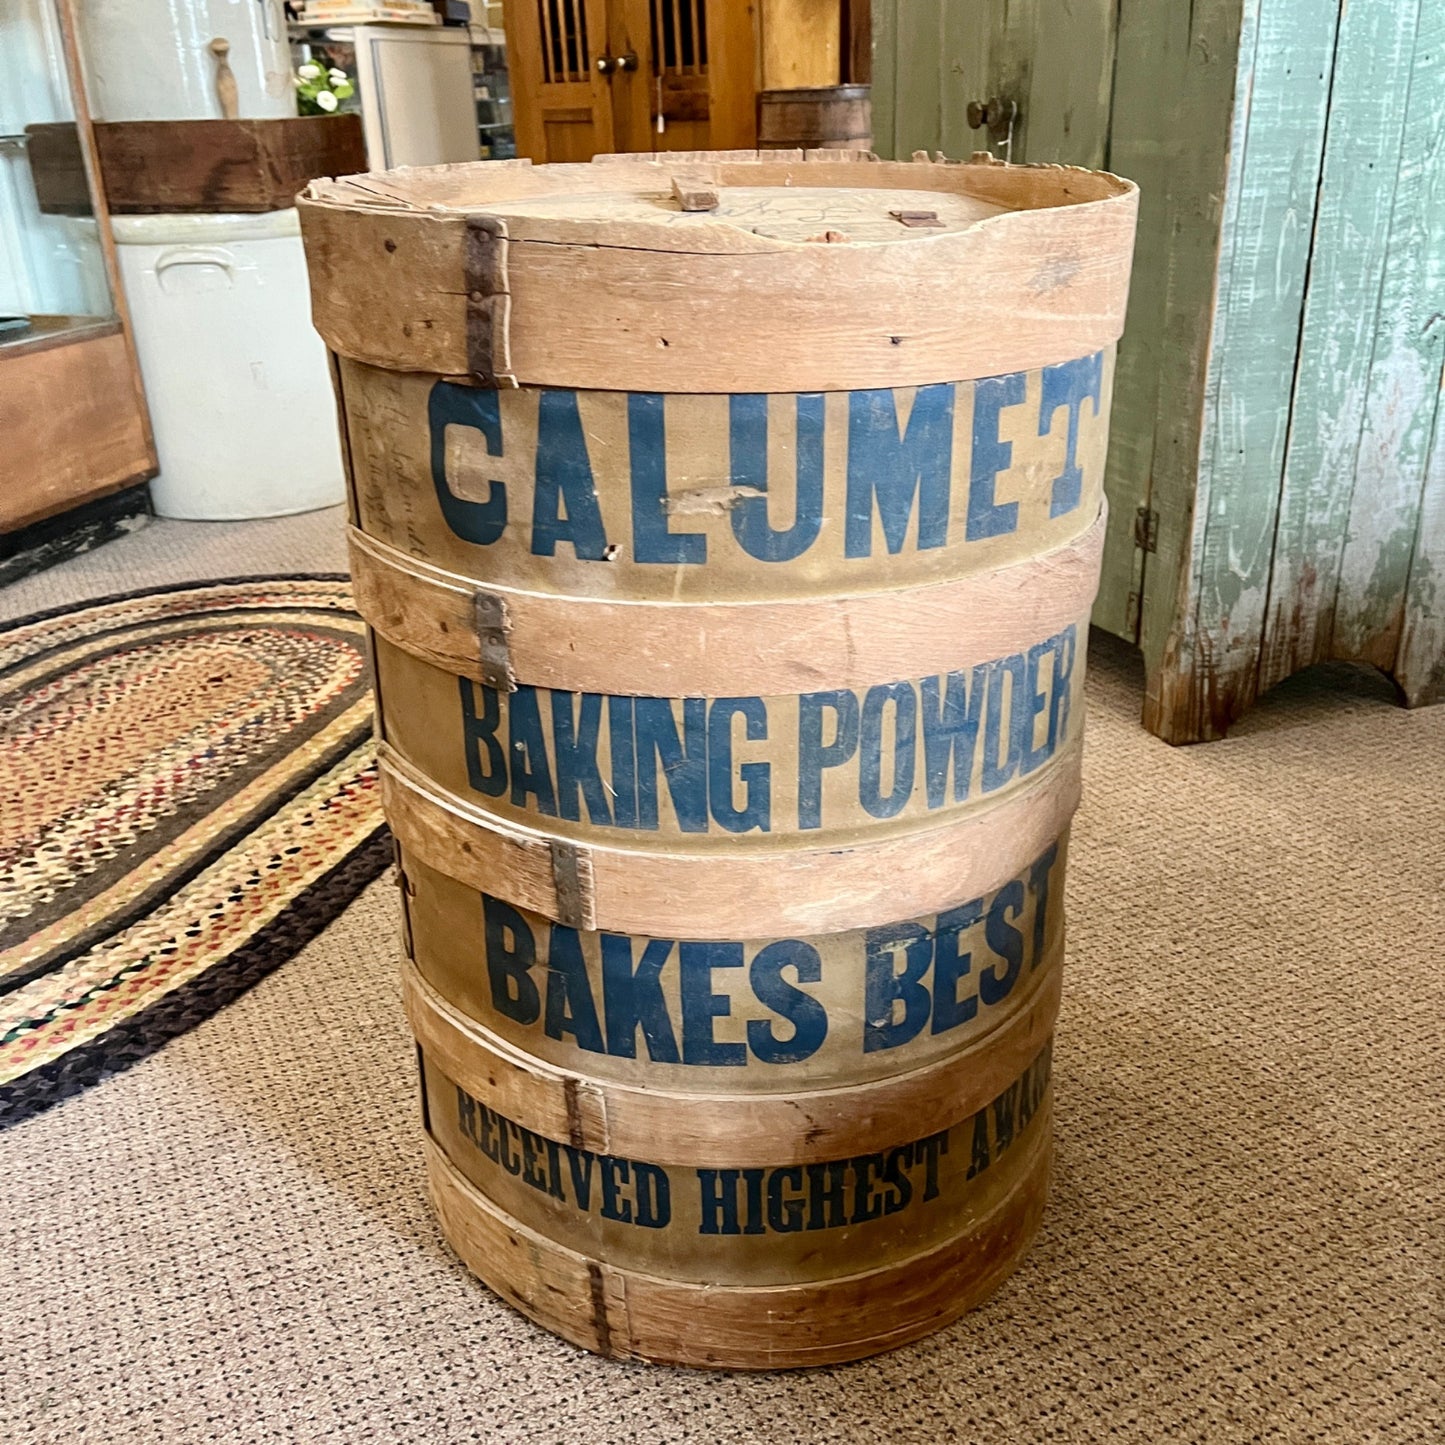 Antique Large Calumet Baking Powder Wooden Keg Rustic Primitive Decor